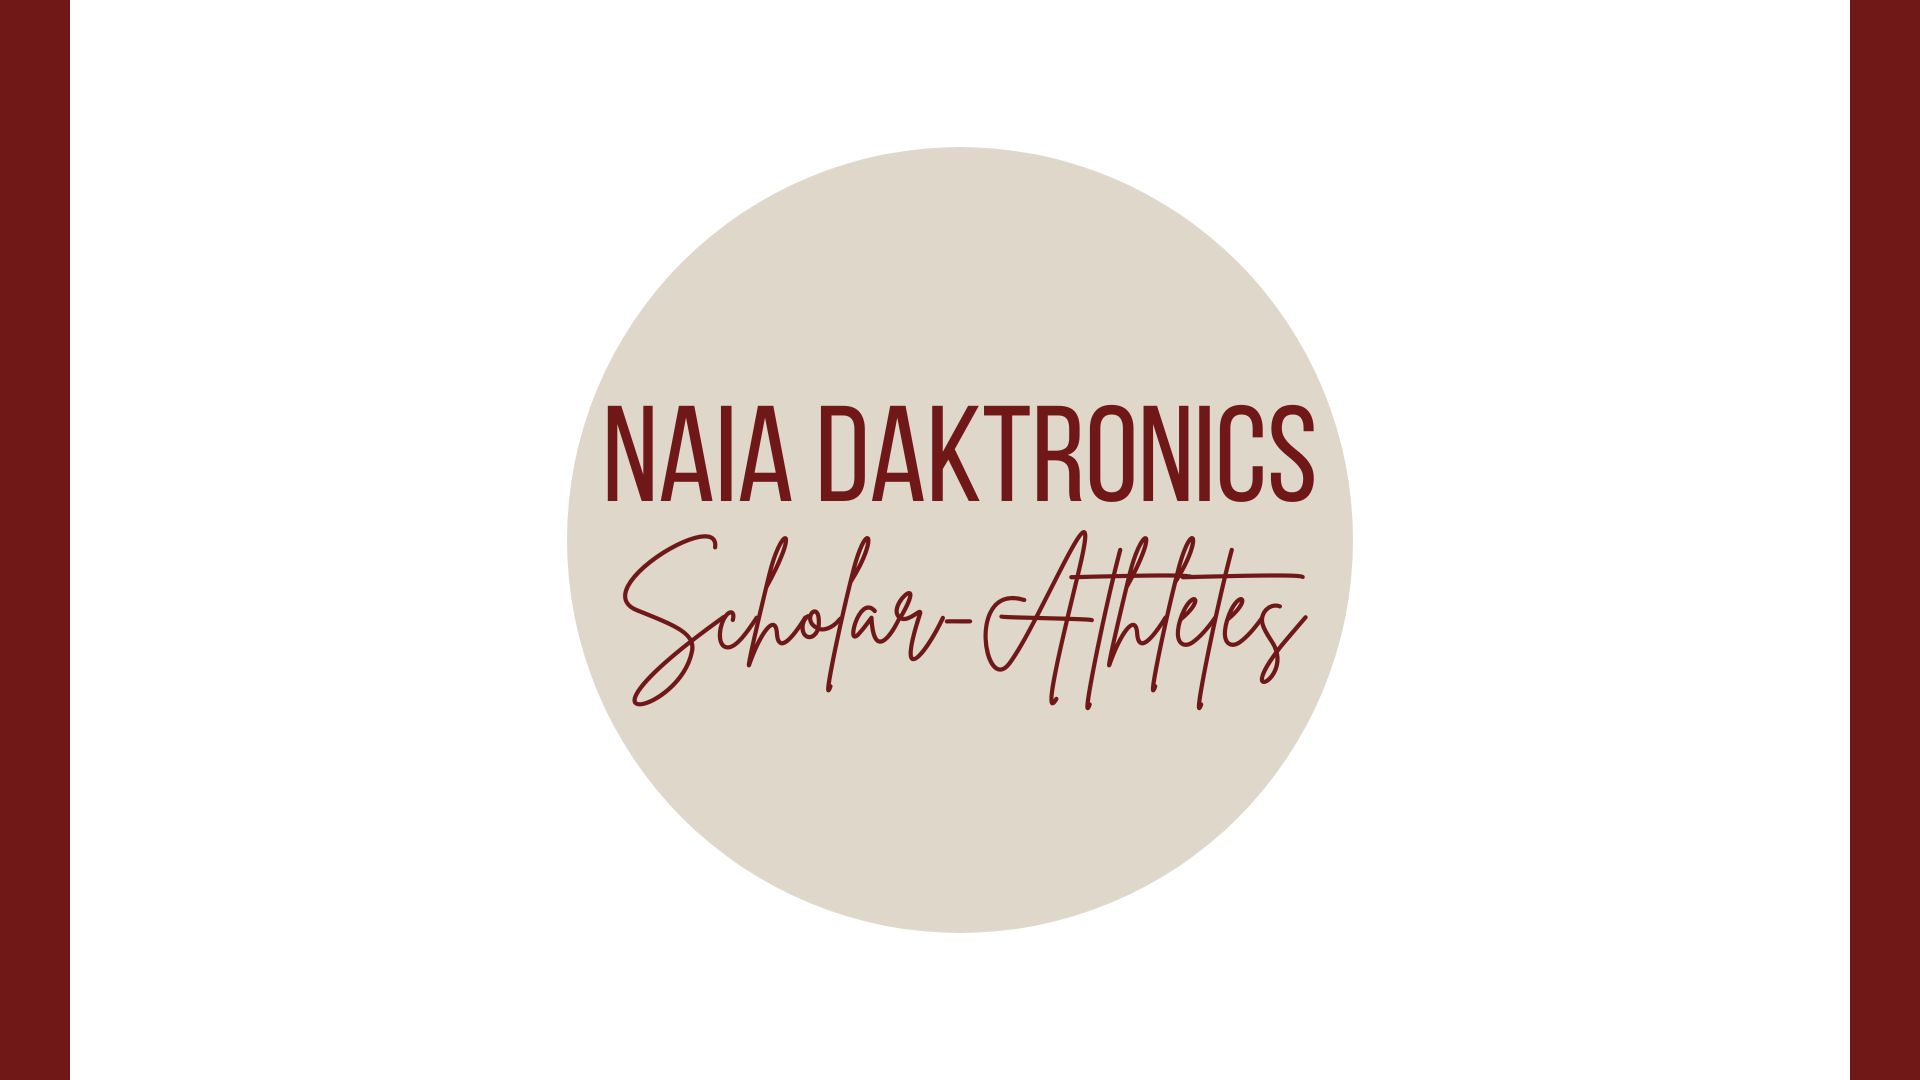 50 student-athletes honored as NAIA Daktronics Scholar-Athletes